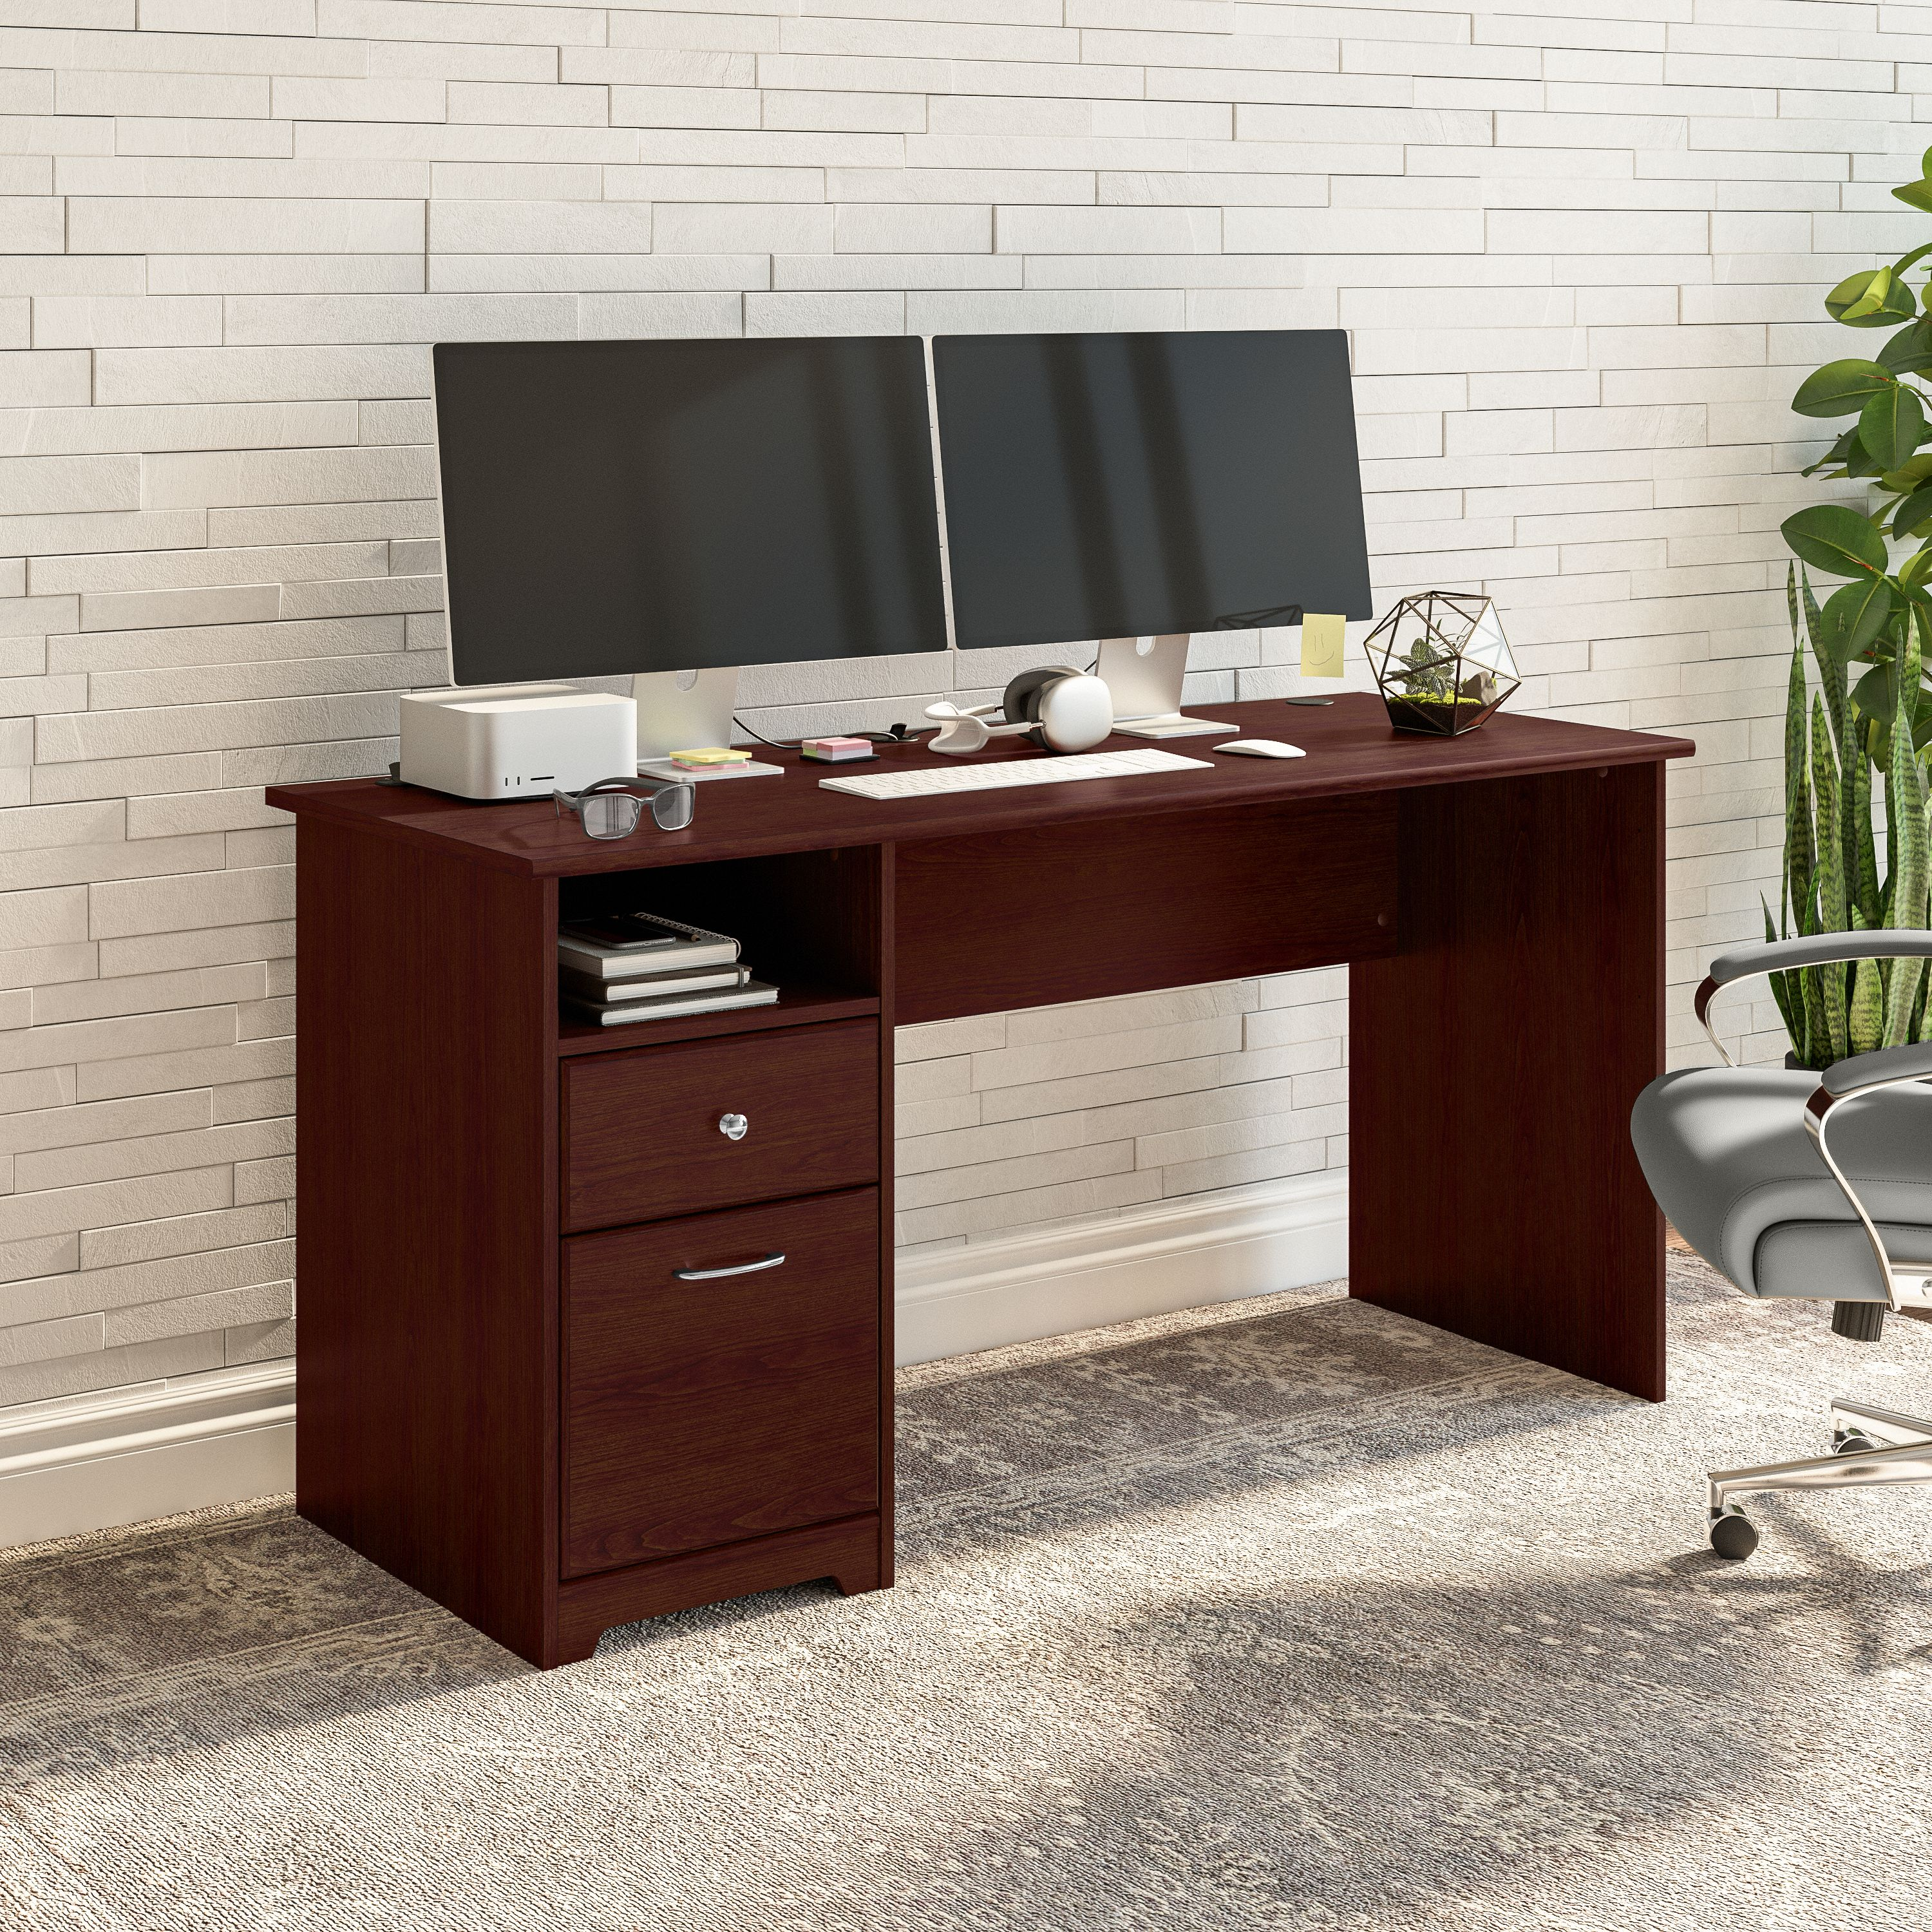 Shop Bush Furniture Cabot 60W Computer Desk with Drawers 01 WC31460 #color_harvest cherry